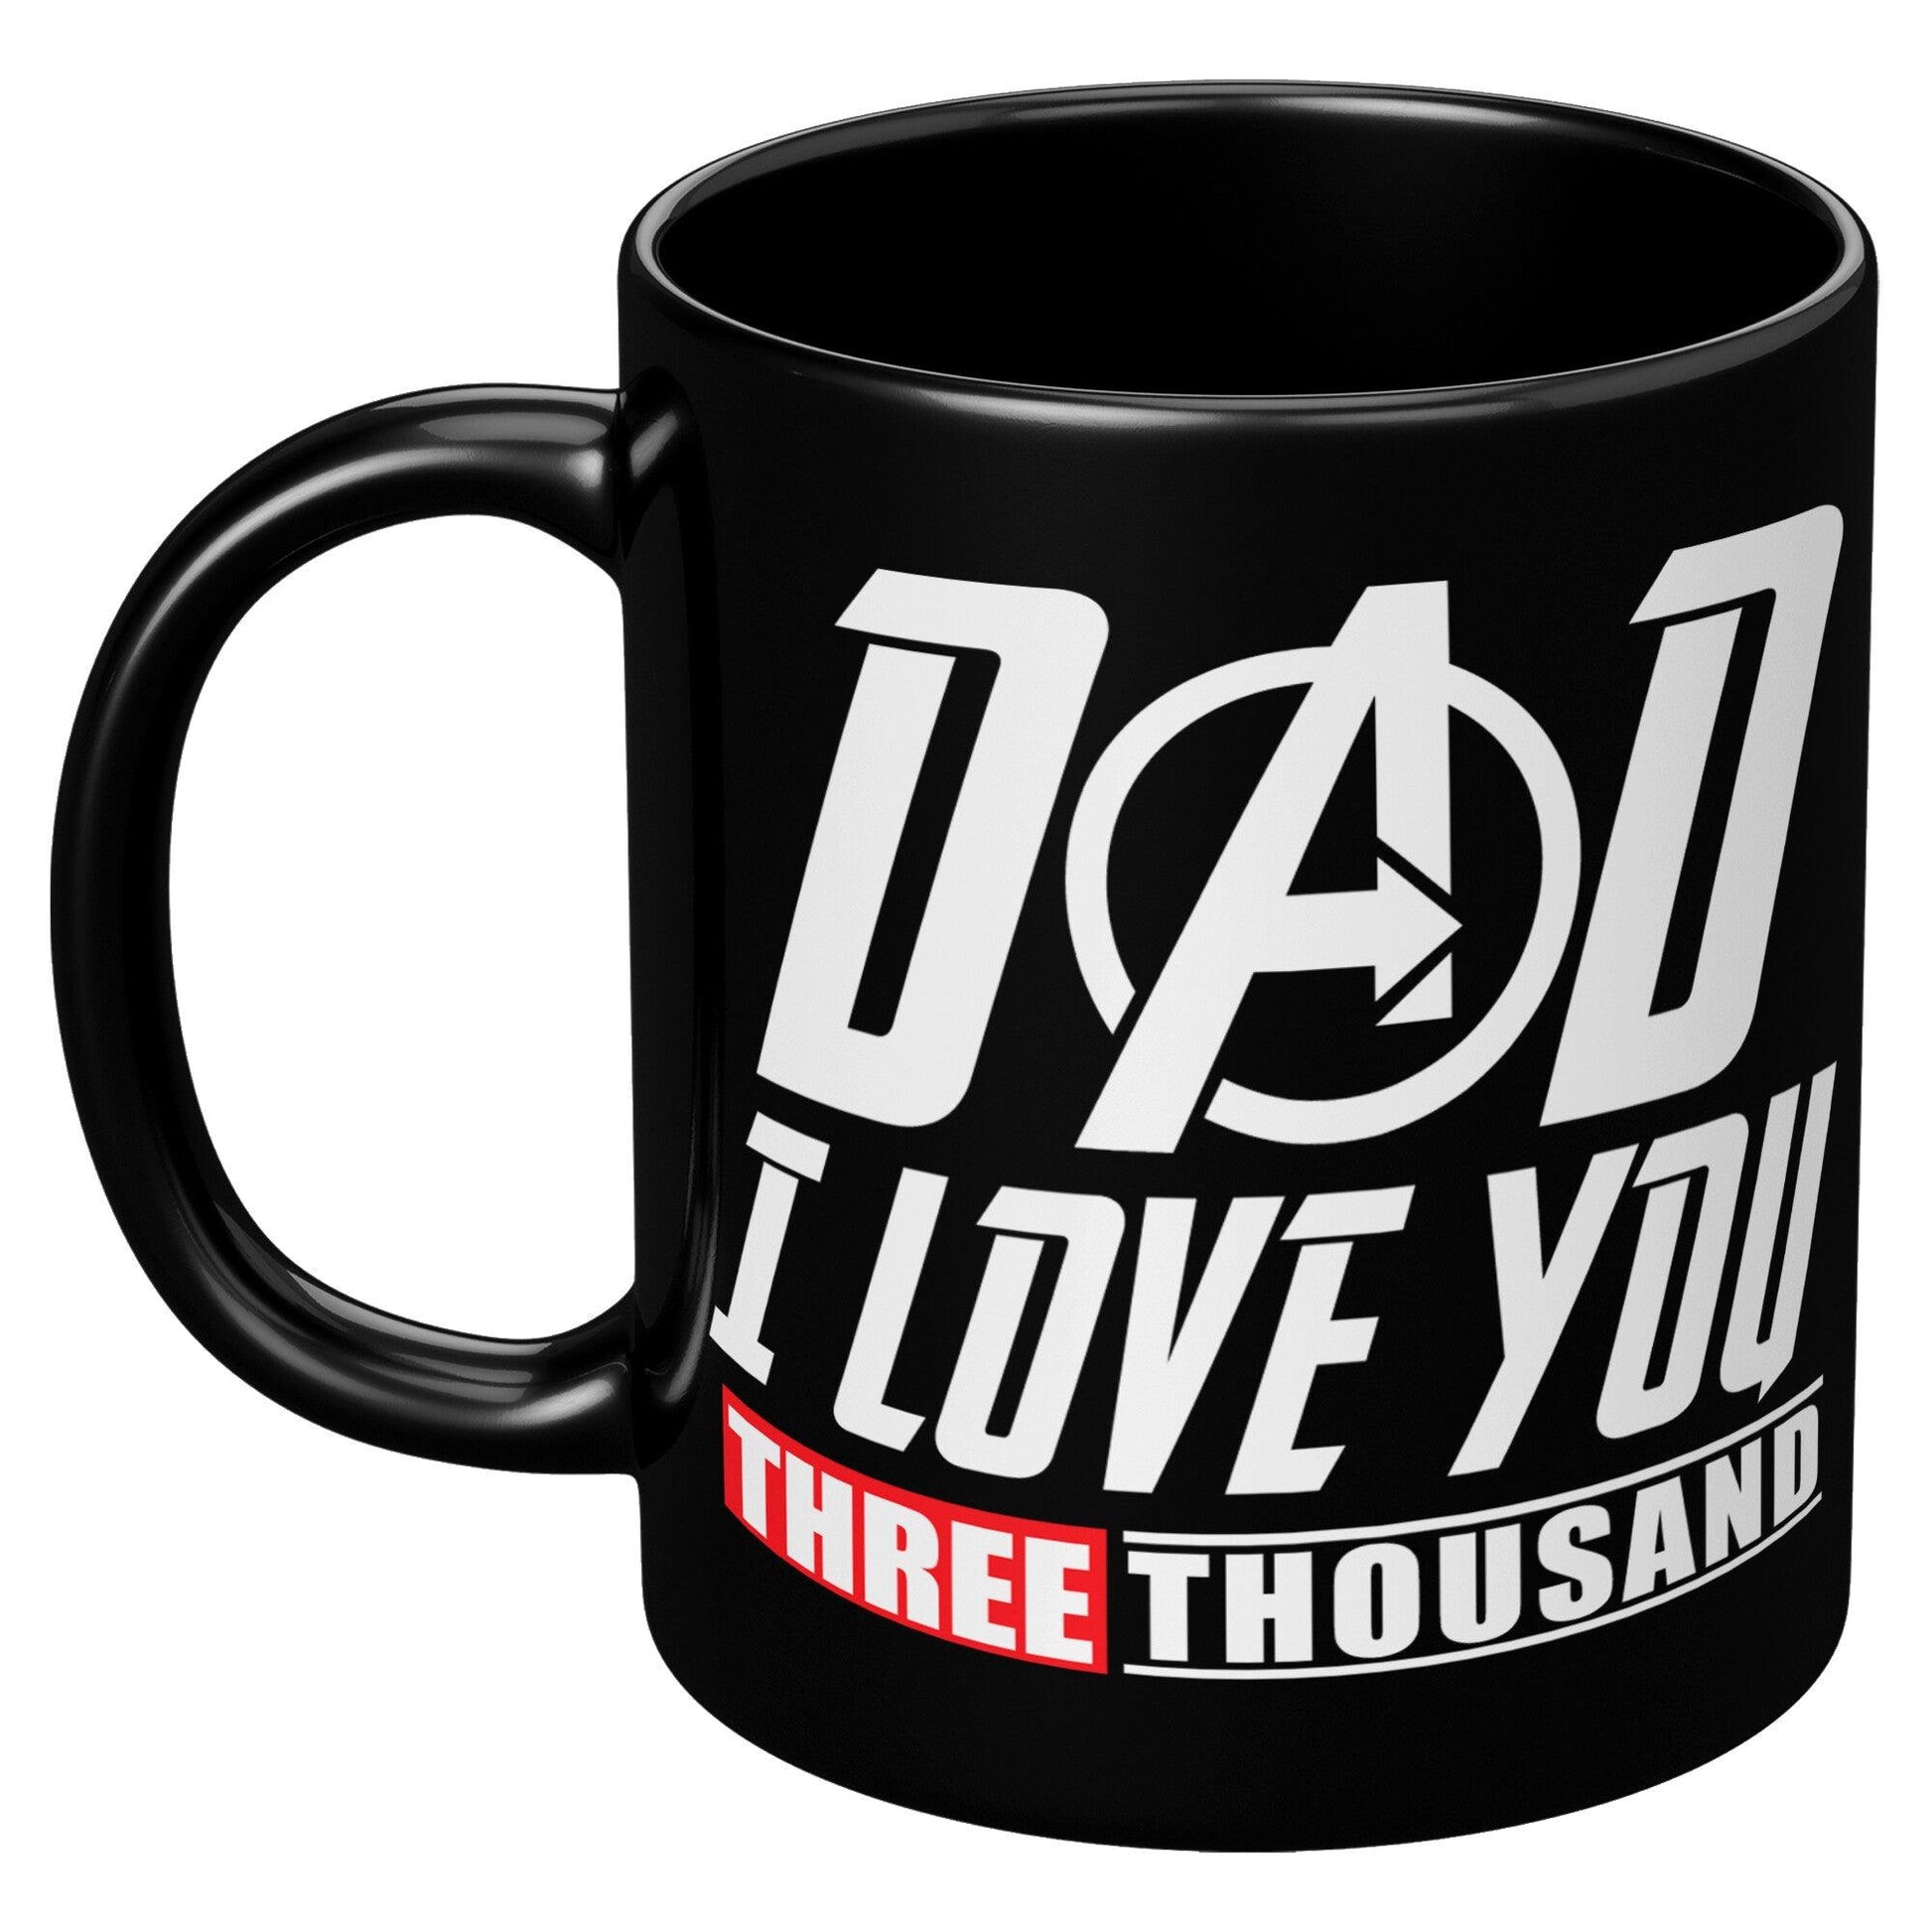 Dad I Love You Three Thousand Black Mug - TheGivenGet